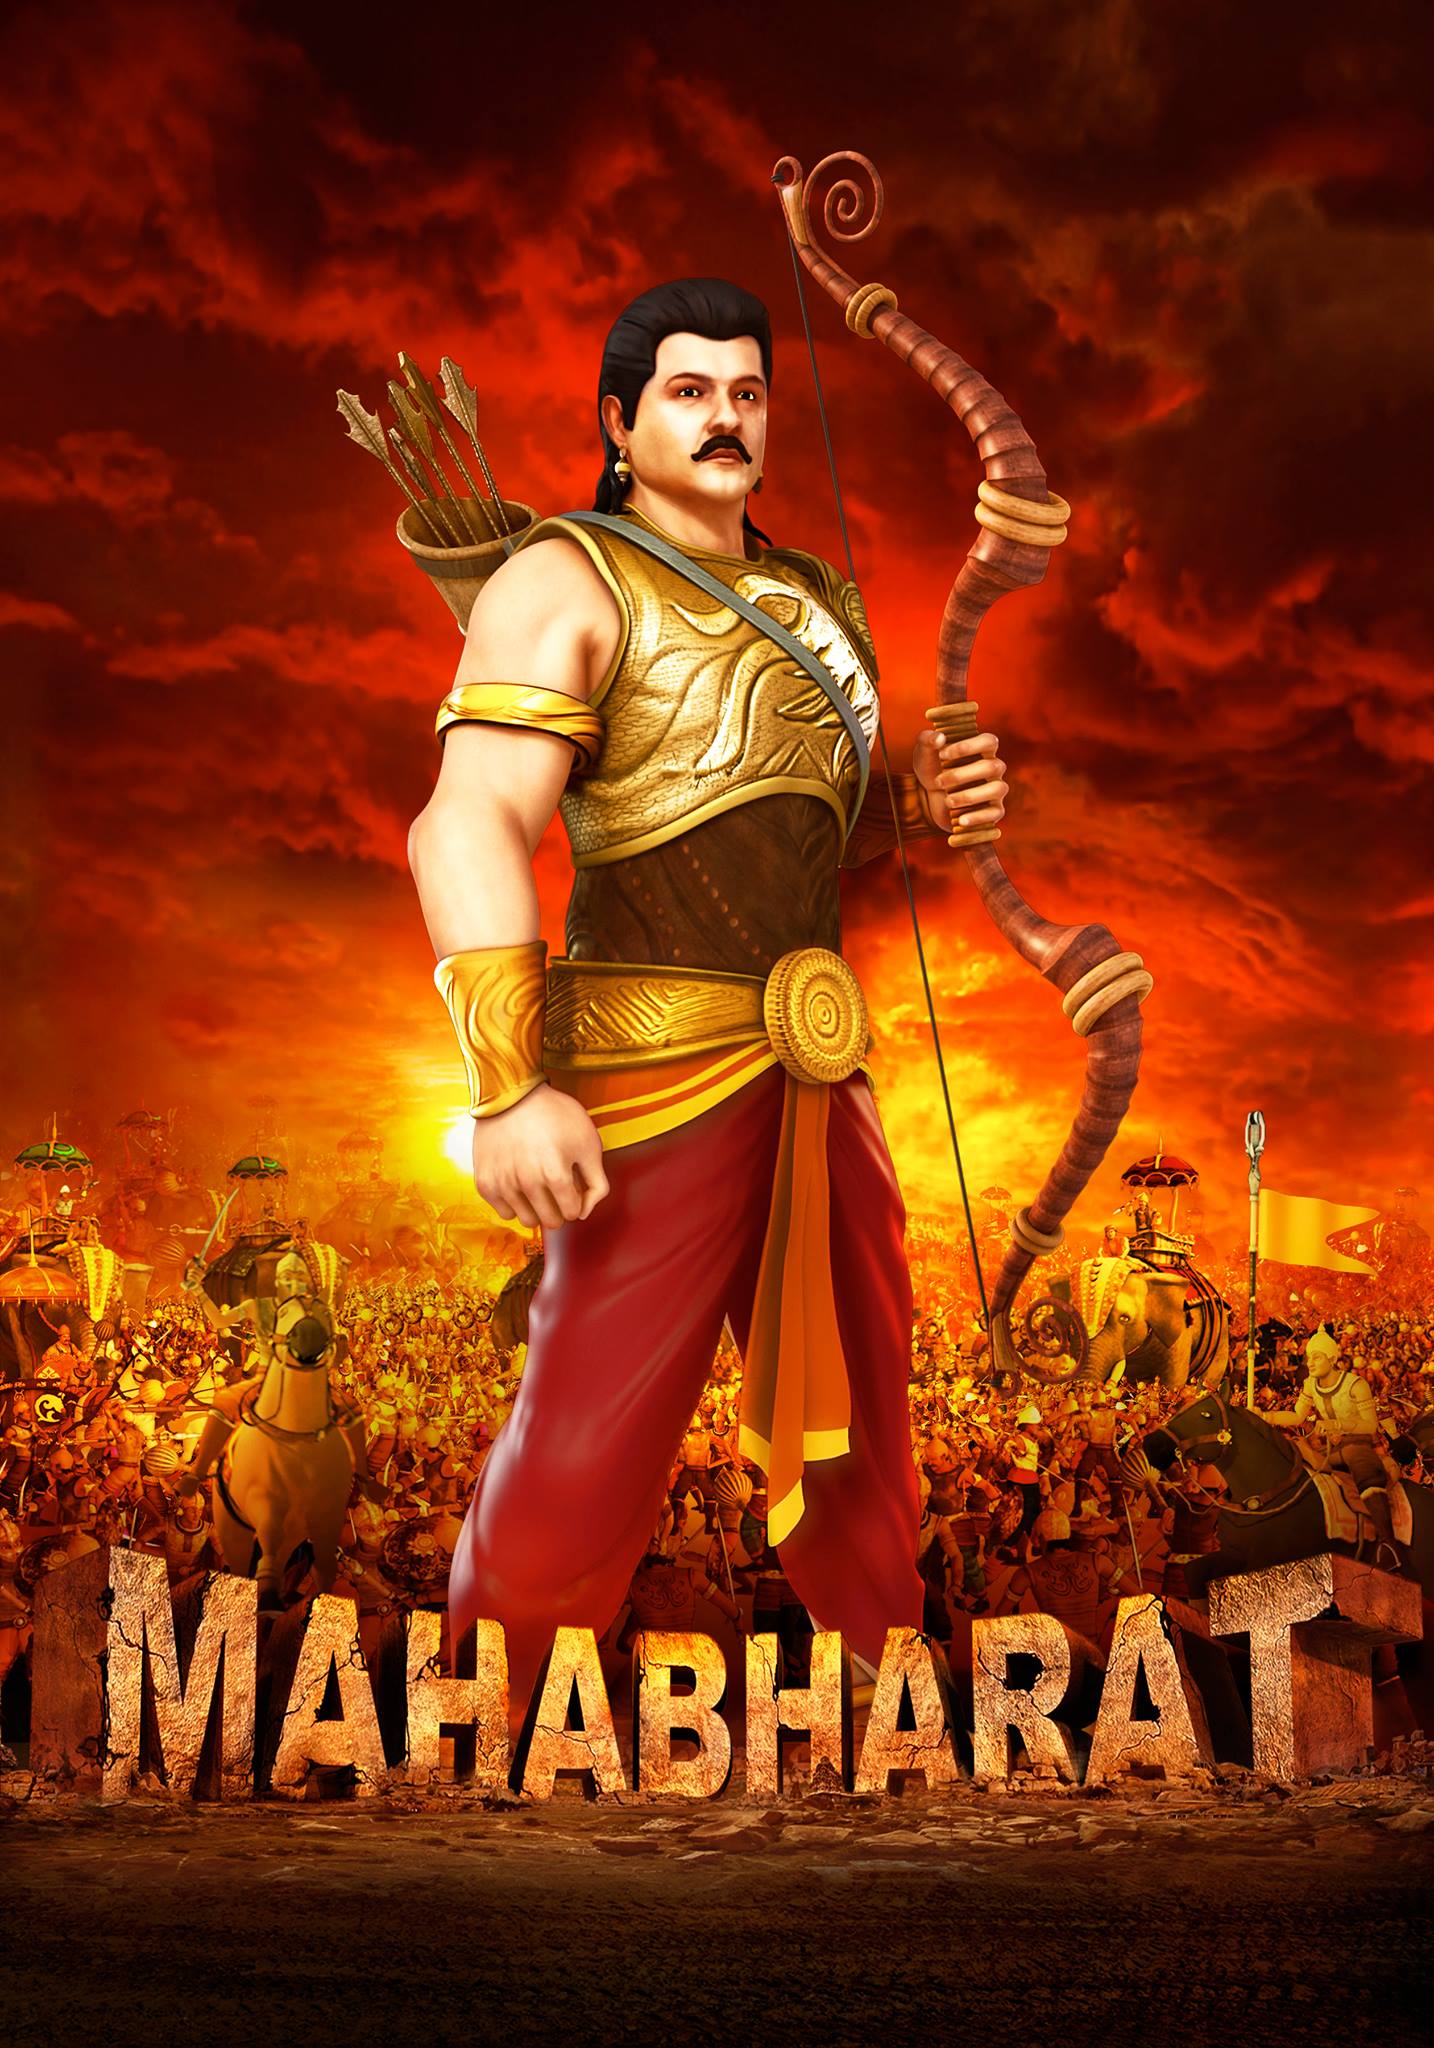 mahabharat star plus all episodes download kickass